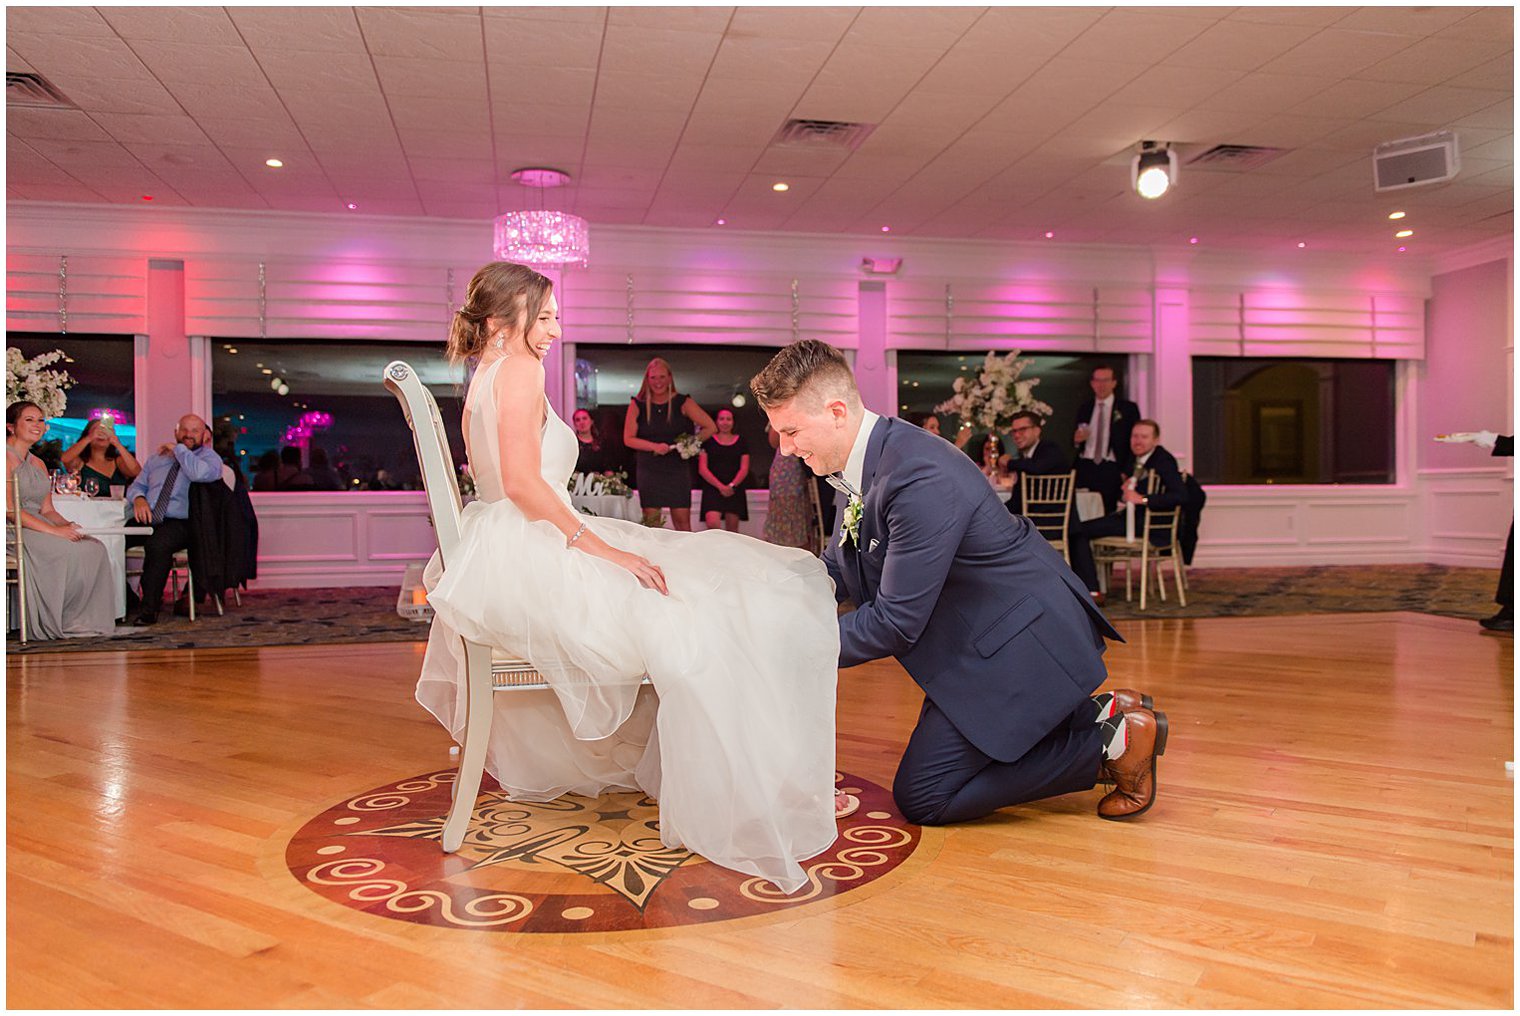 groom gets garter from bride's leg during NJ wedding reception